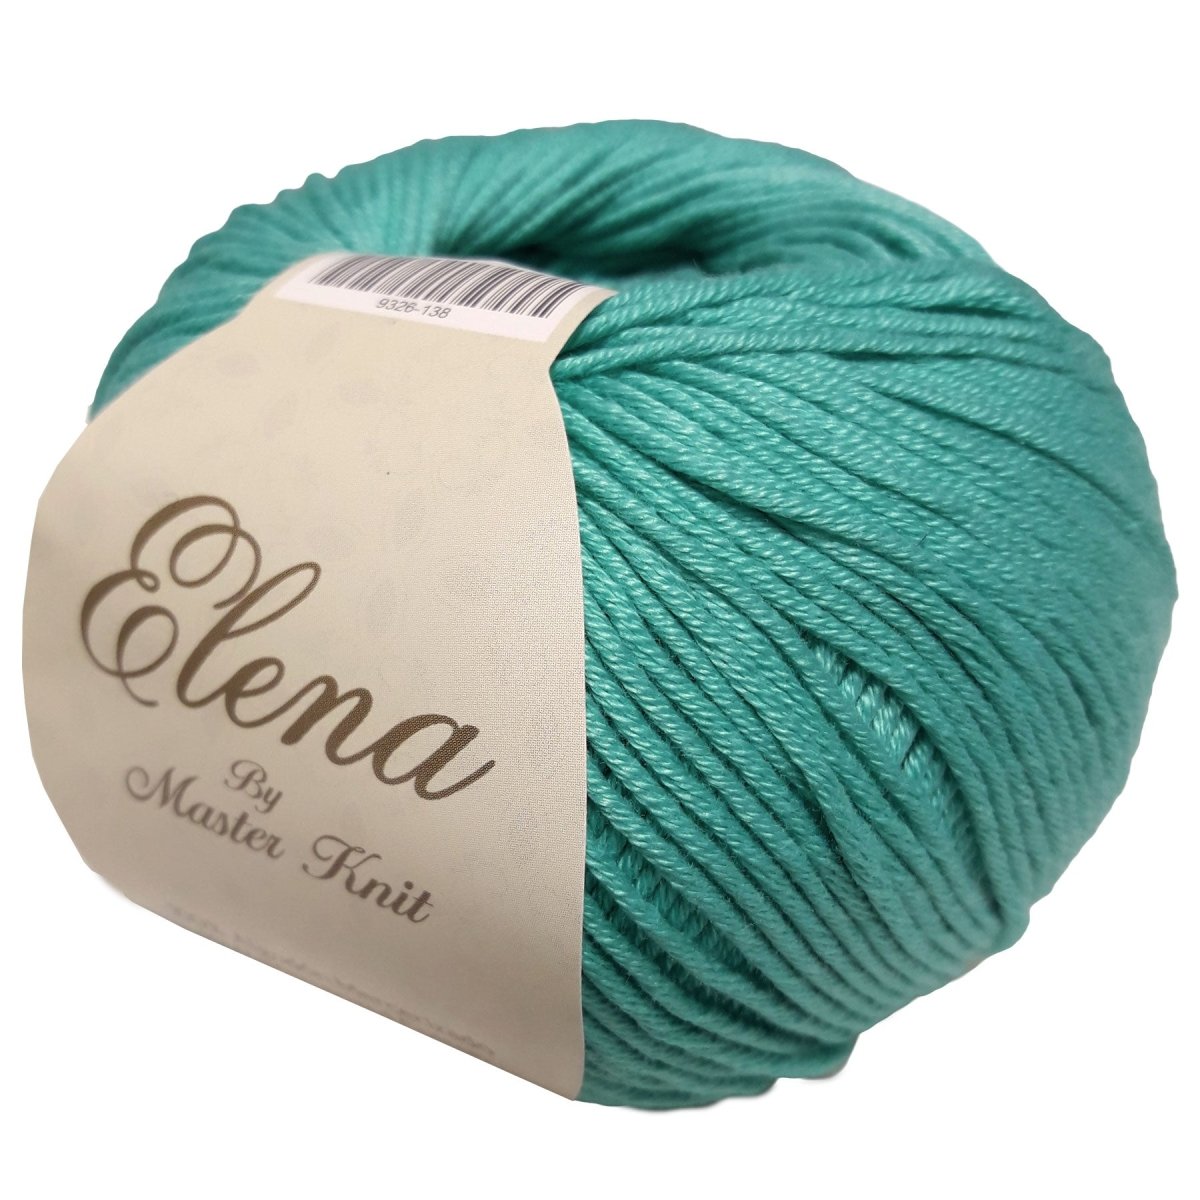 ELENA - Crochetstores9326-138